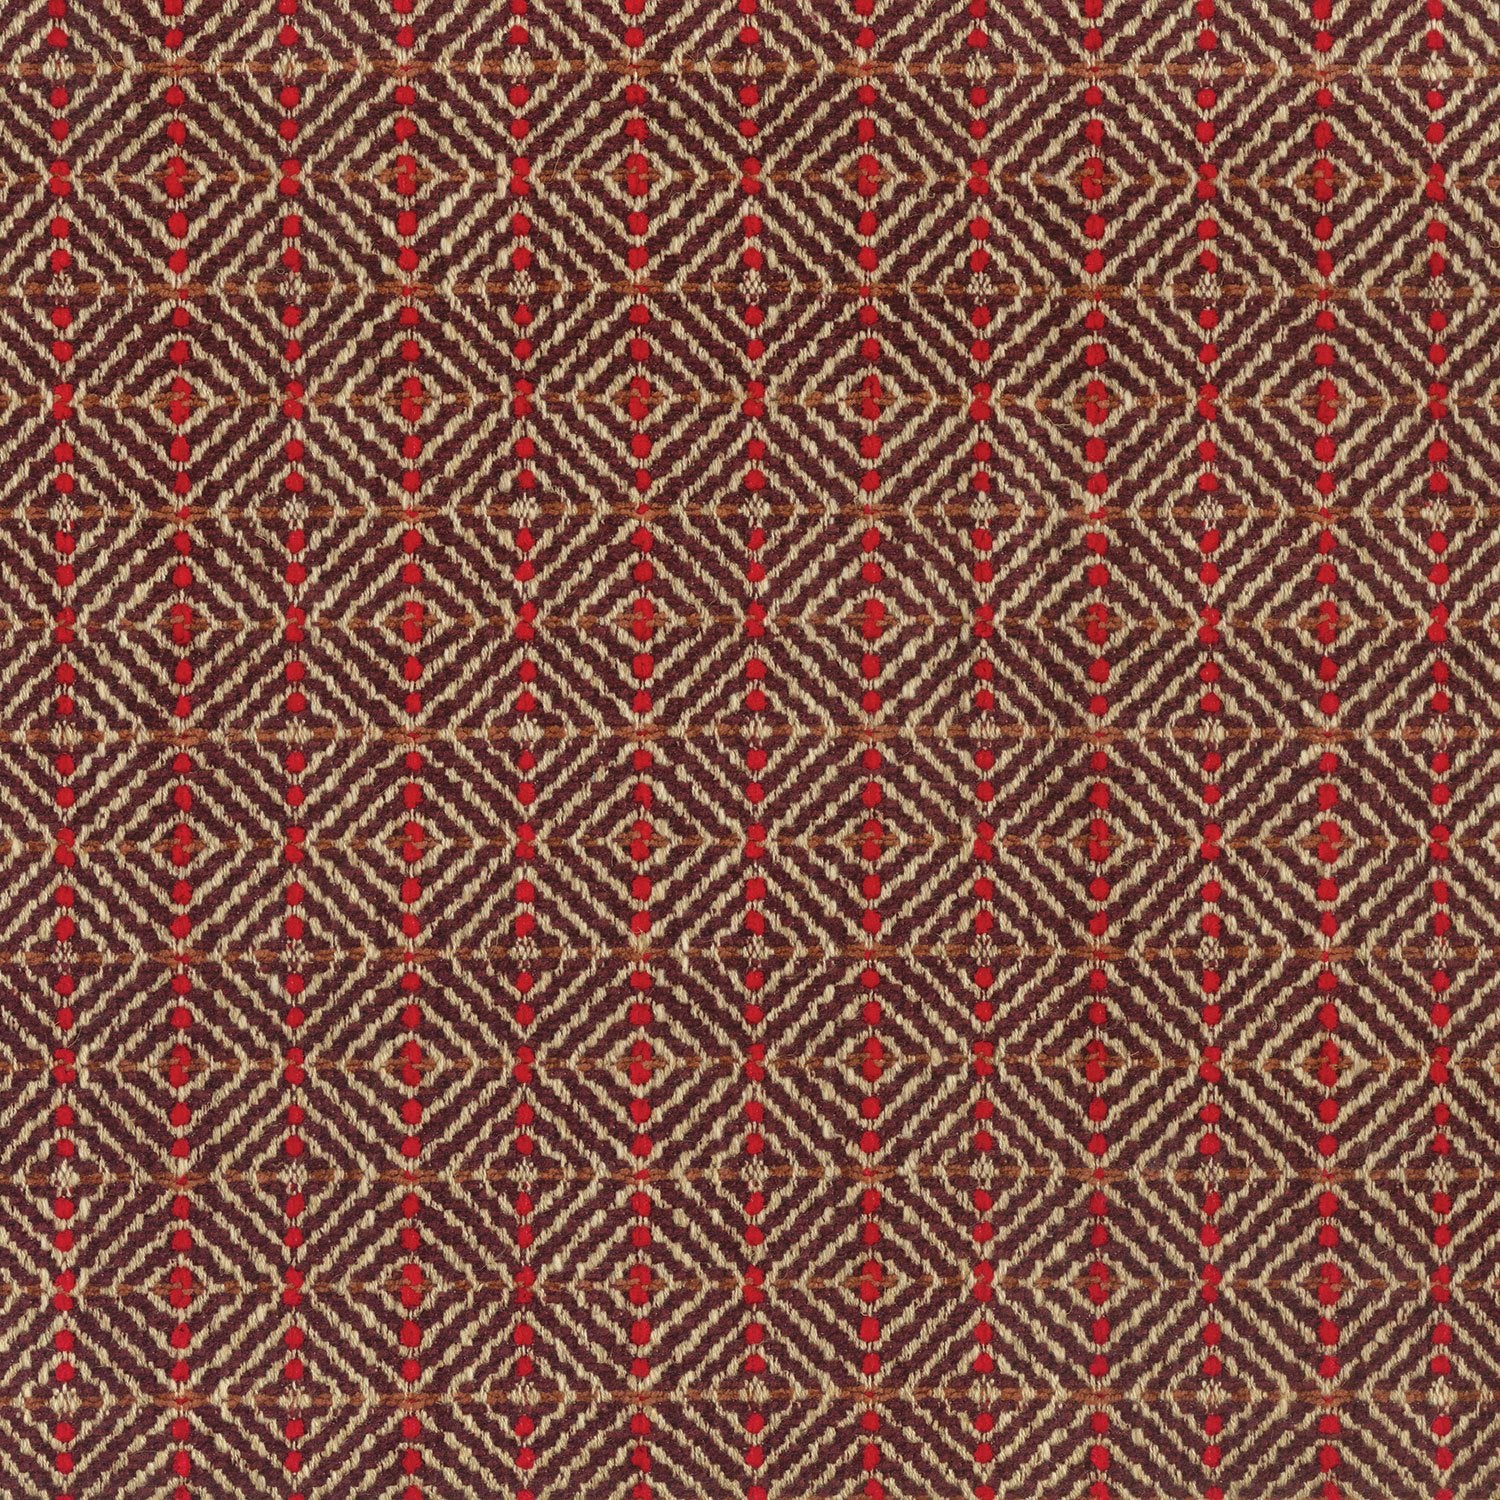 Nina Campbell Fabric - Umbria Todi Crimson/Red NCF4262-07